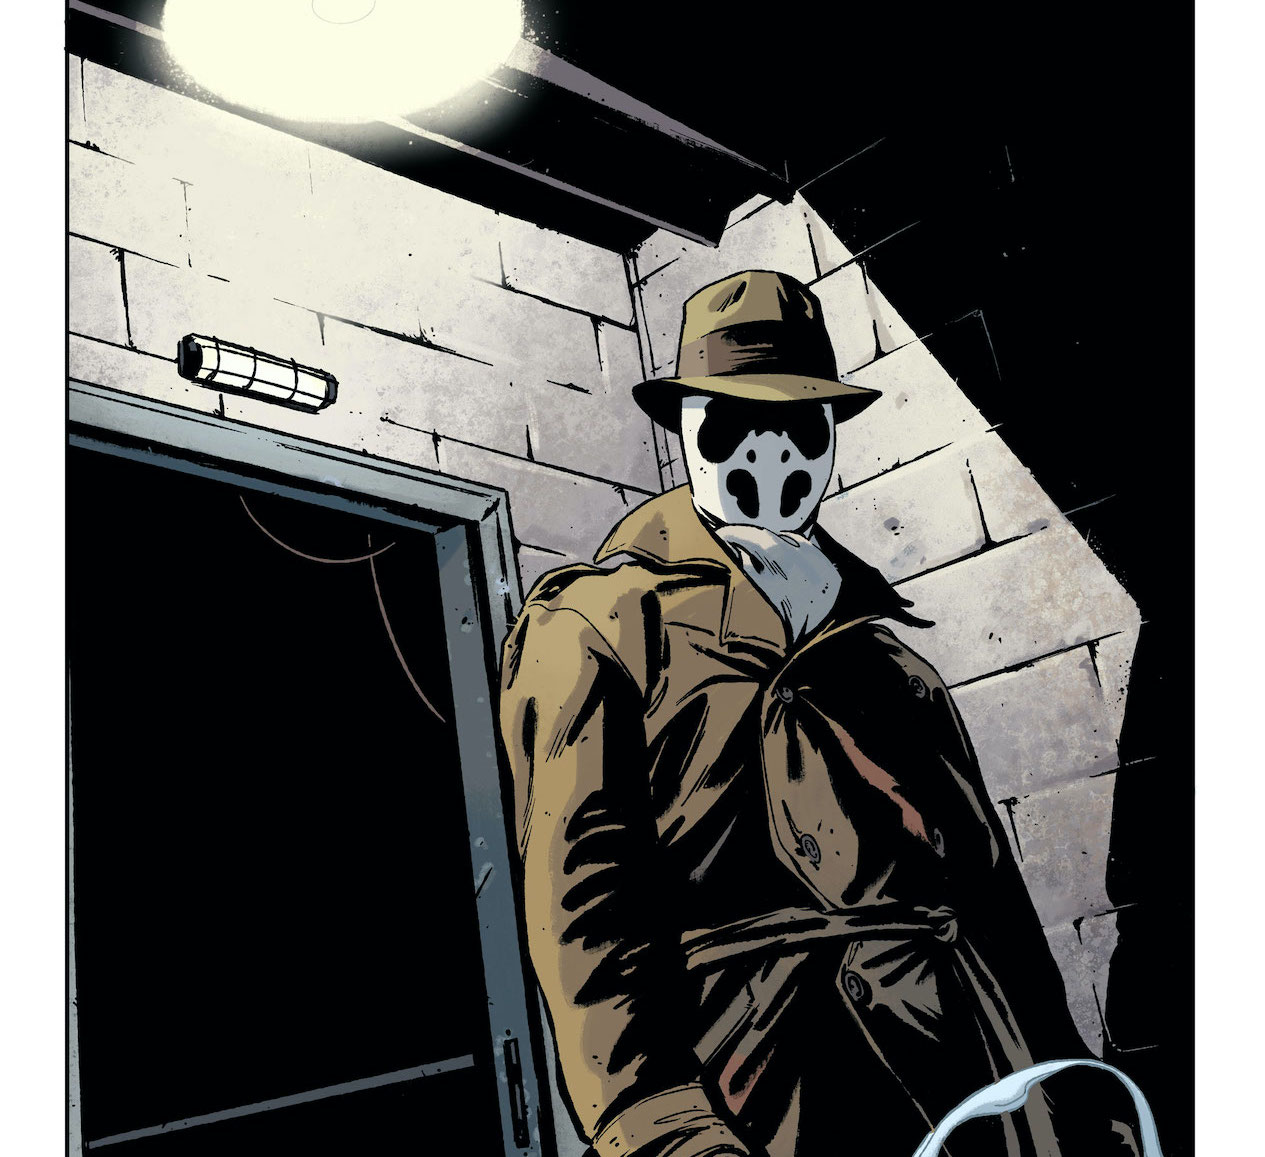 Rorschach from Watchmen returns in new DC series